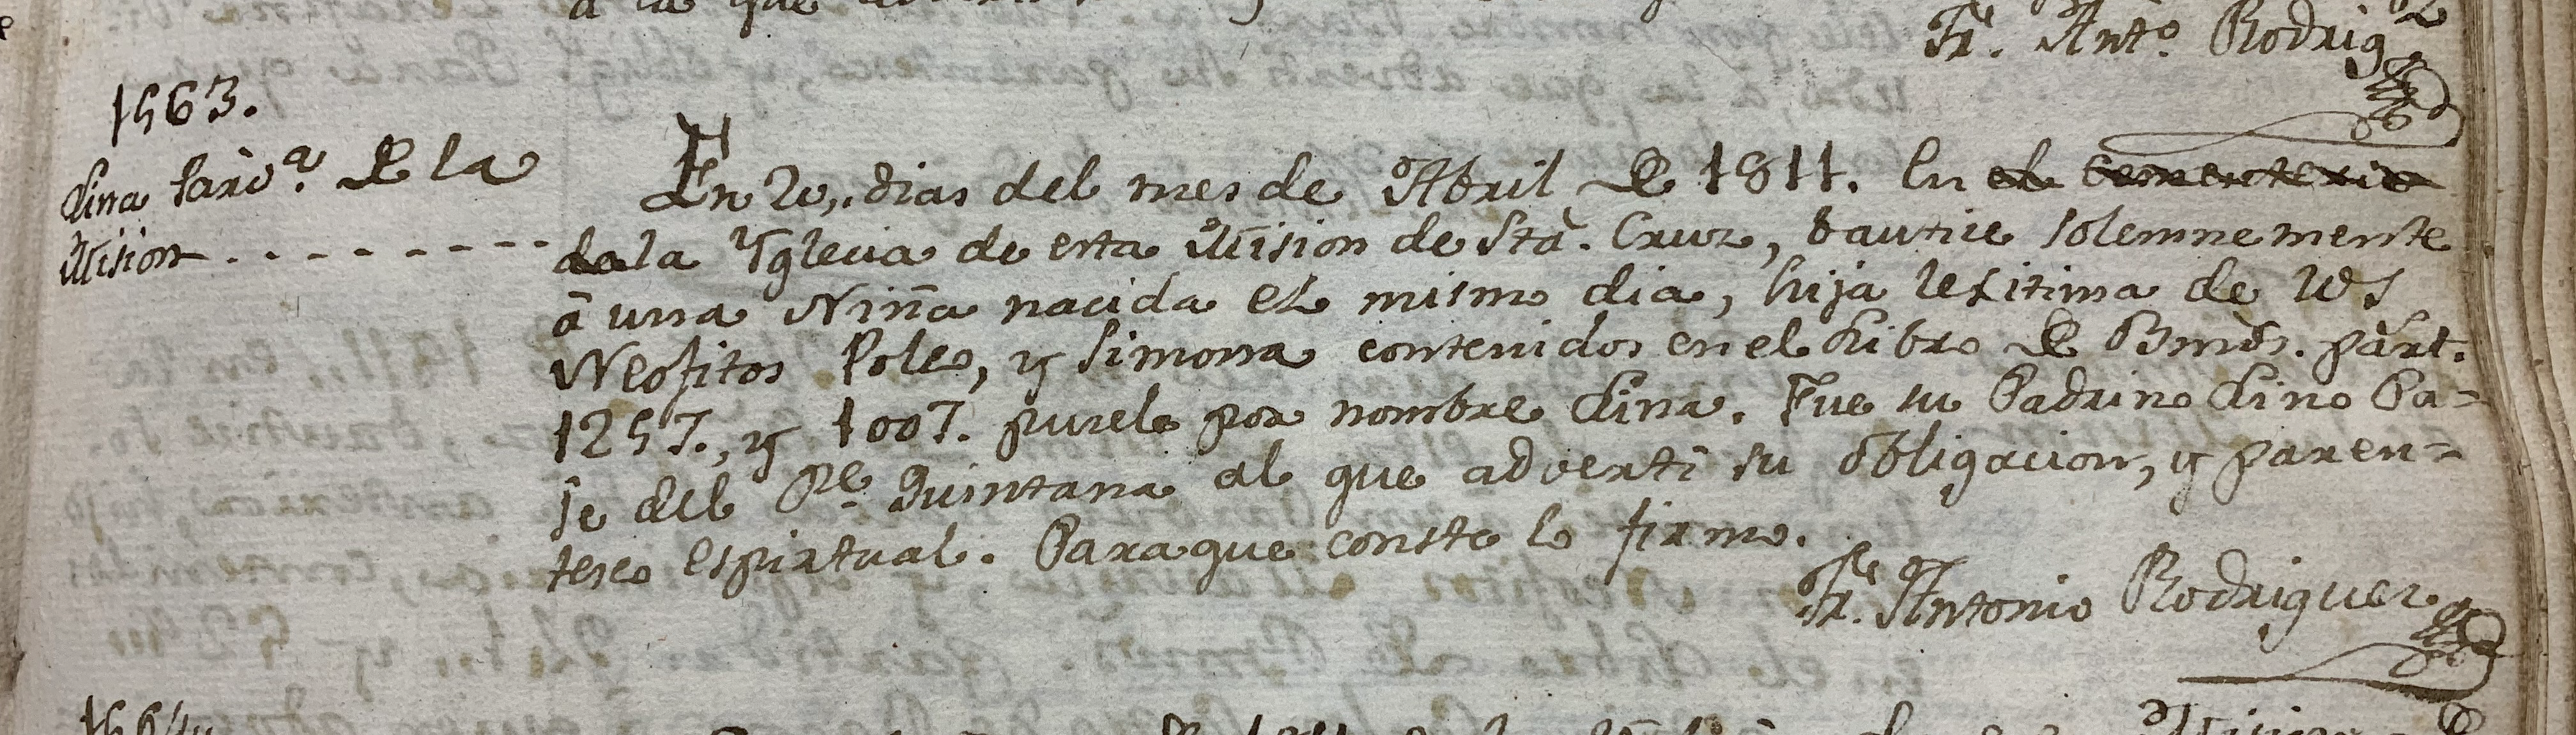 Historic handwritten document